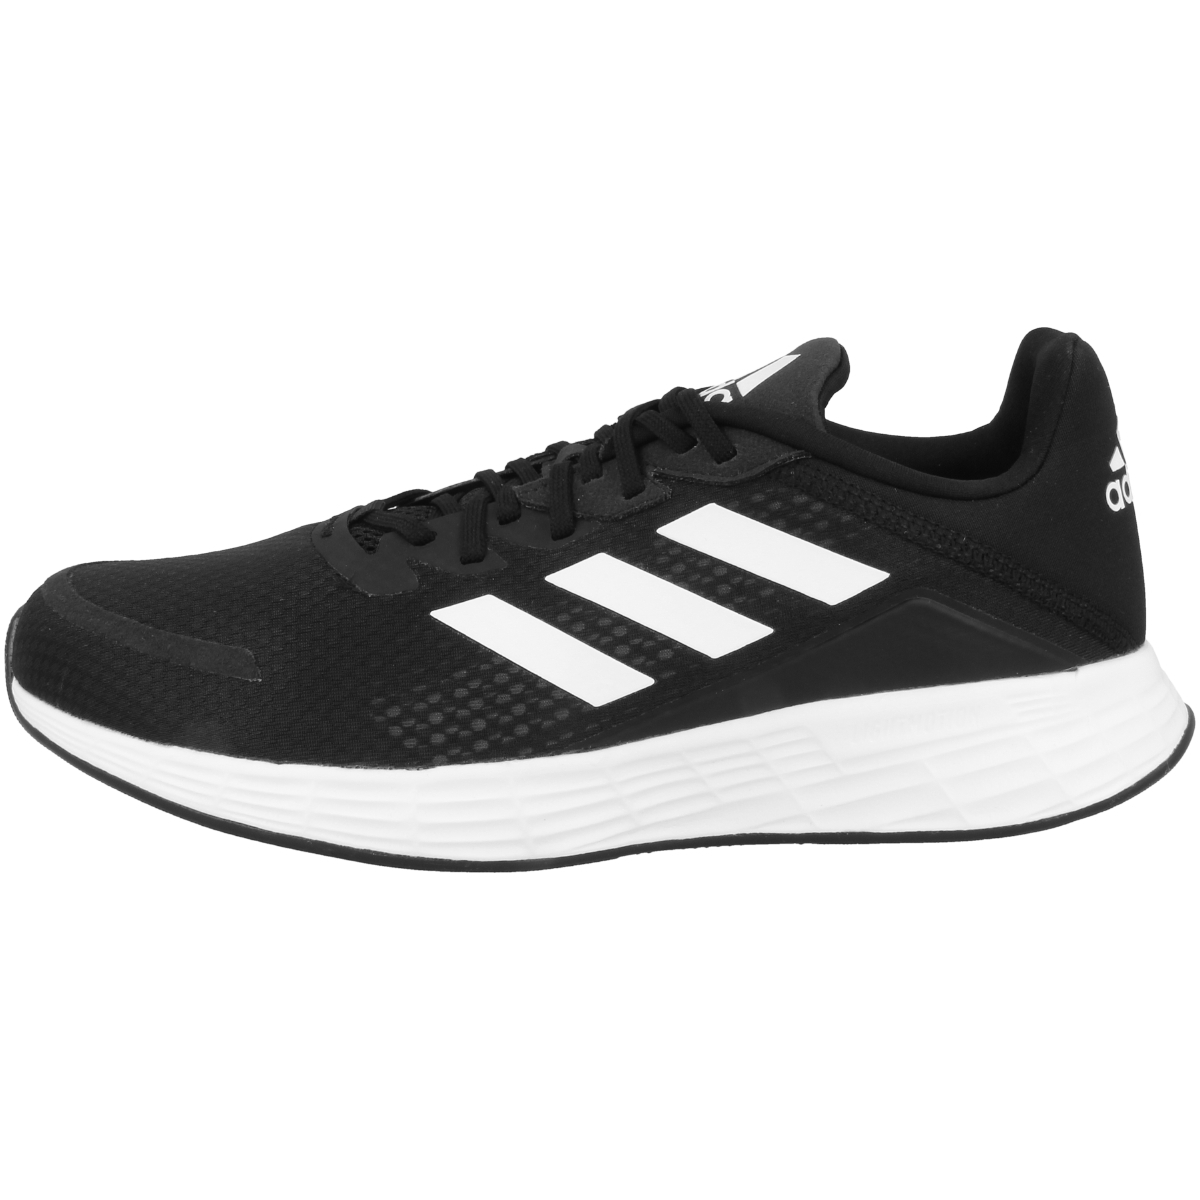 Adidas Duramo SL Laufschuhe schwarz